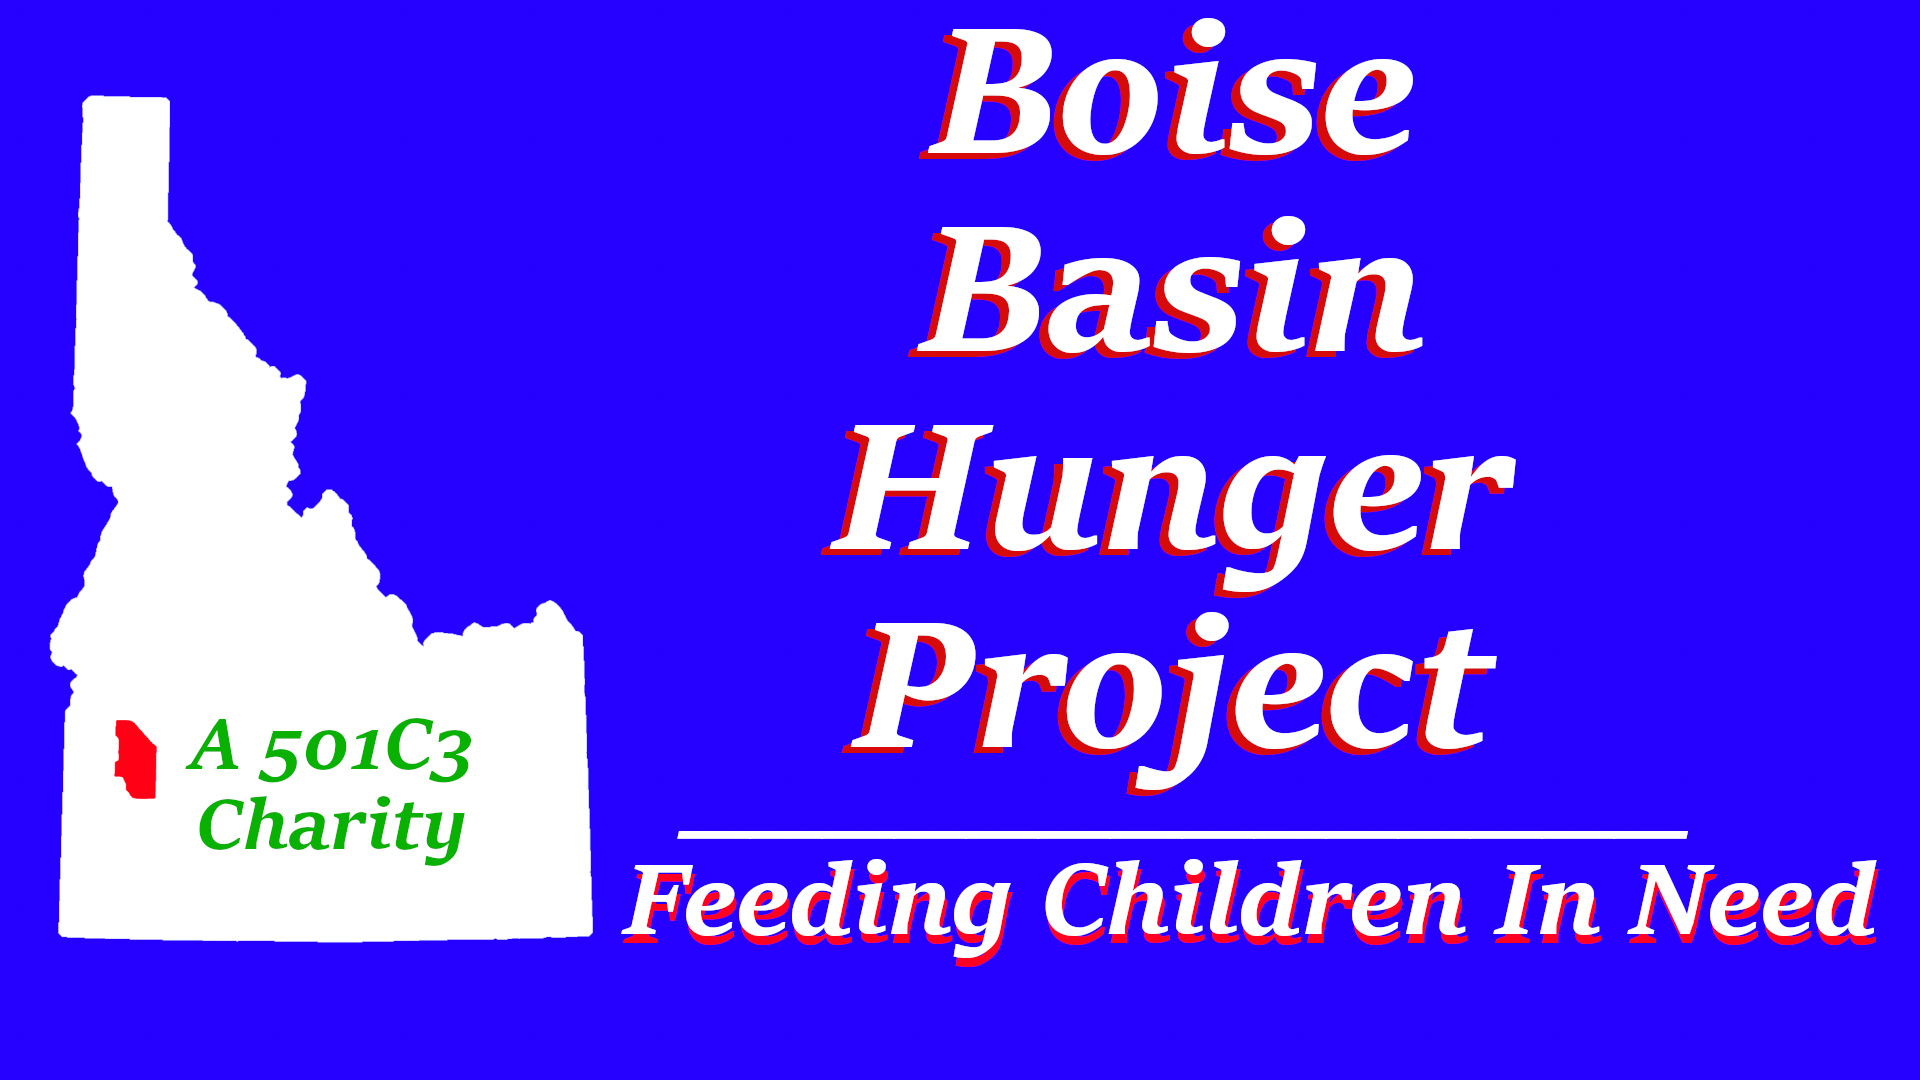 Boise Basin Hunger Project